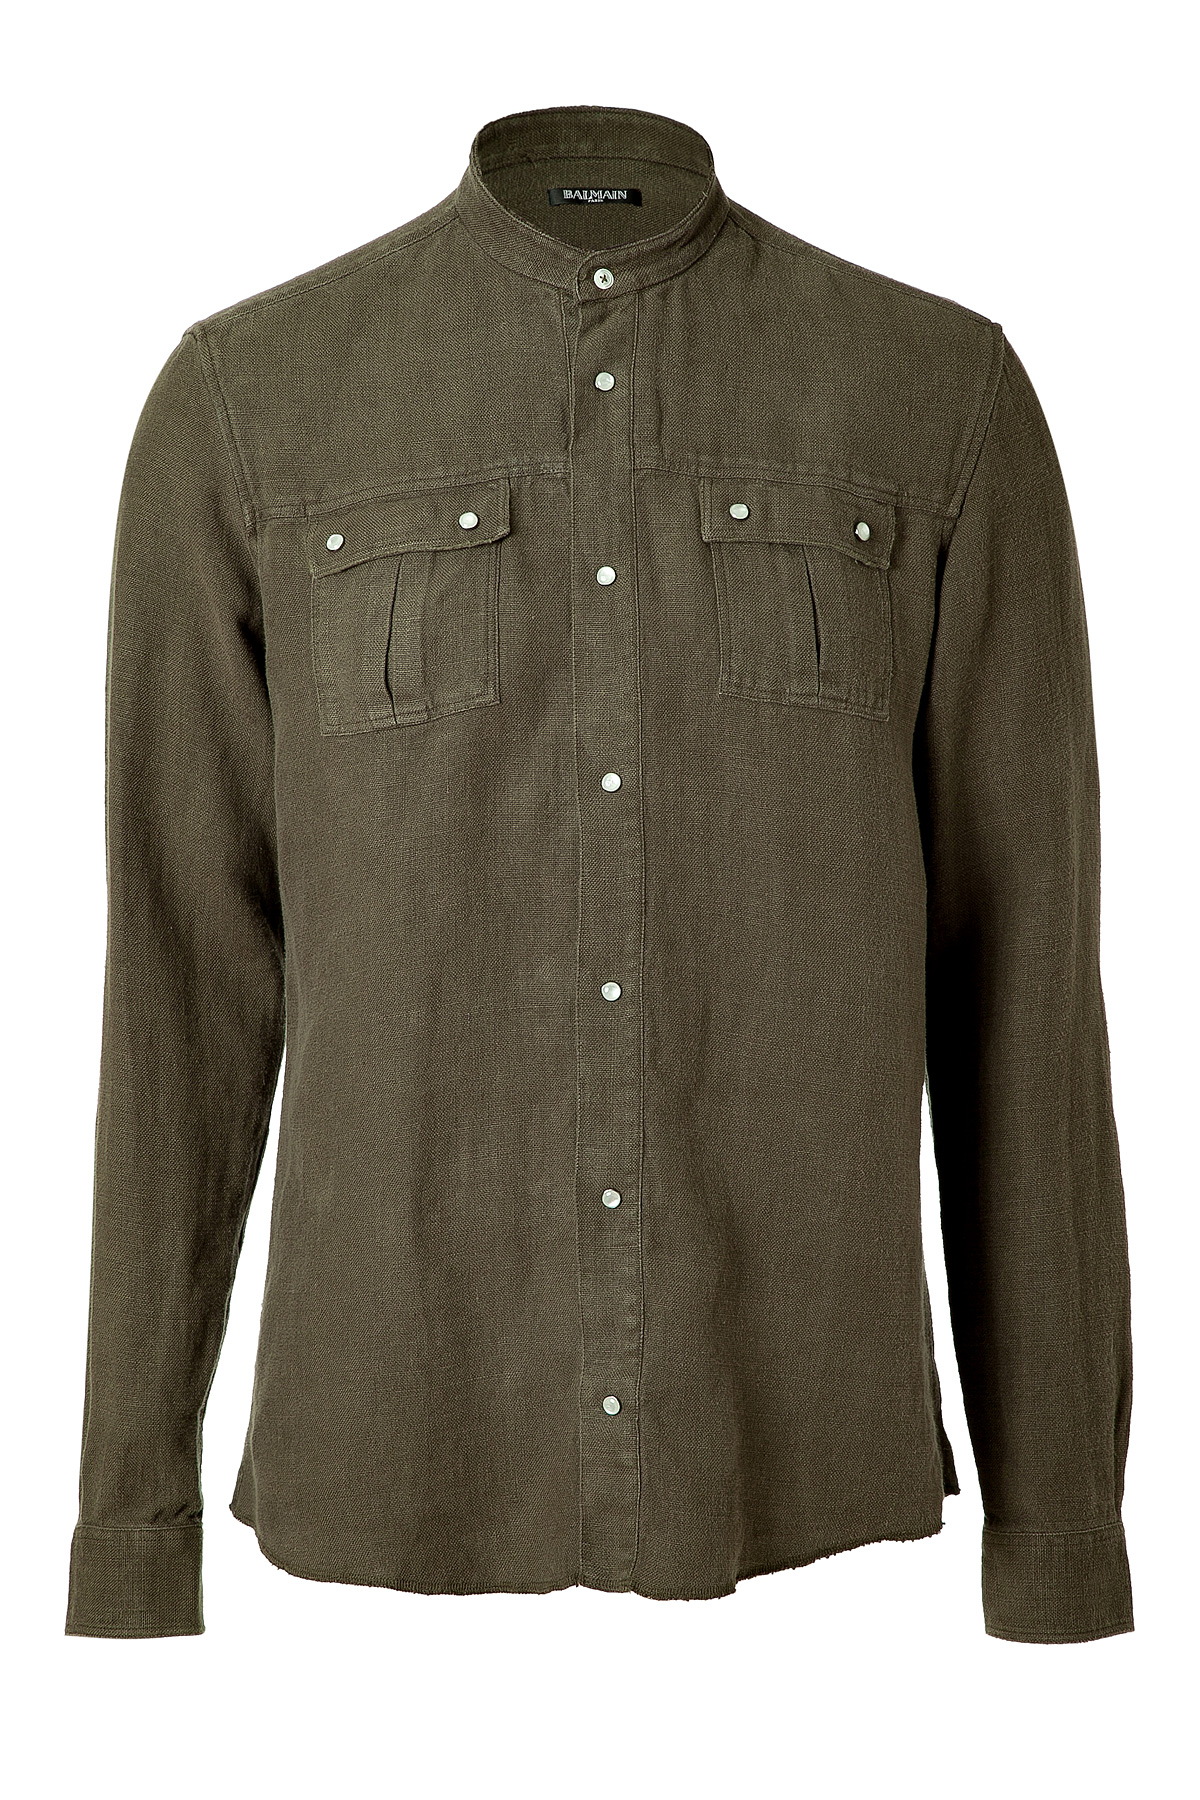 Balmain Linen Collarless Shirt in Khaki for Men | Lyst